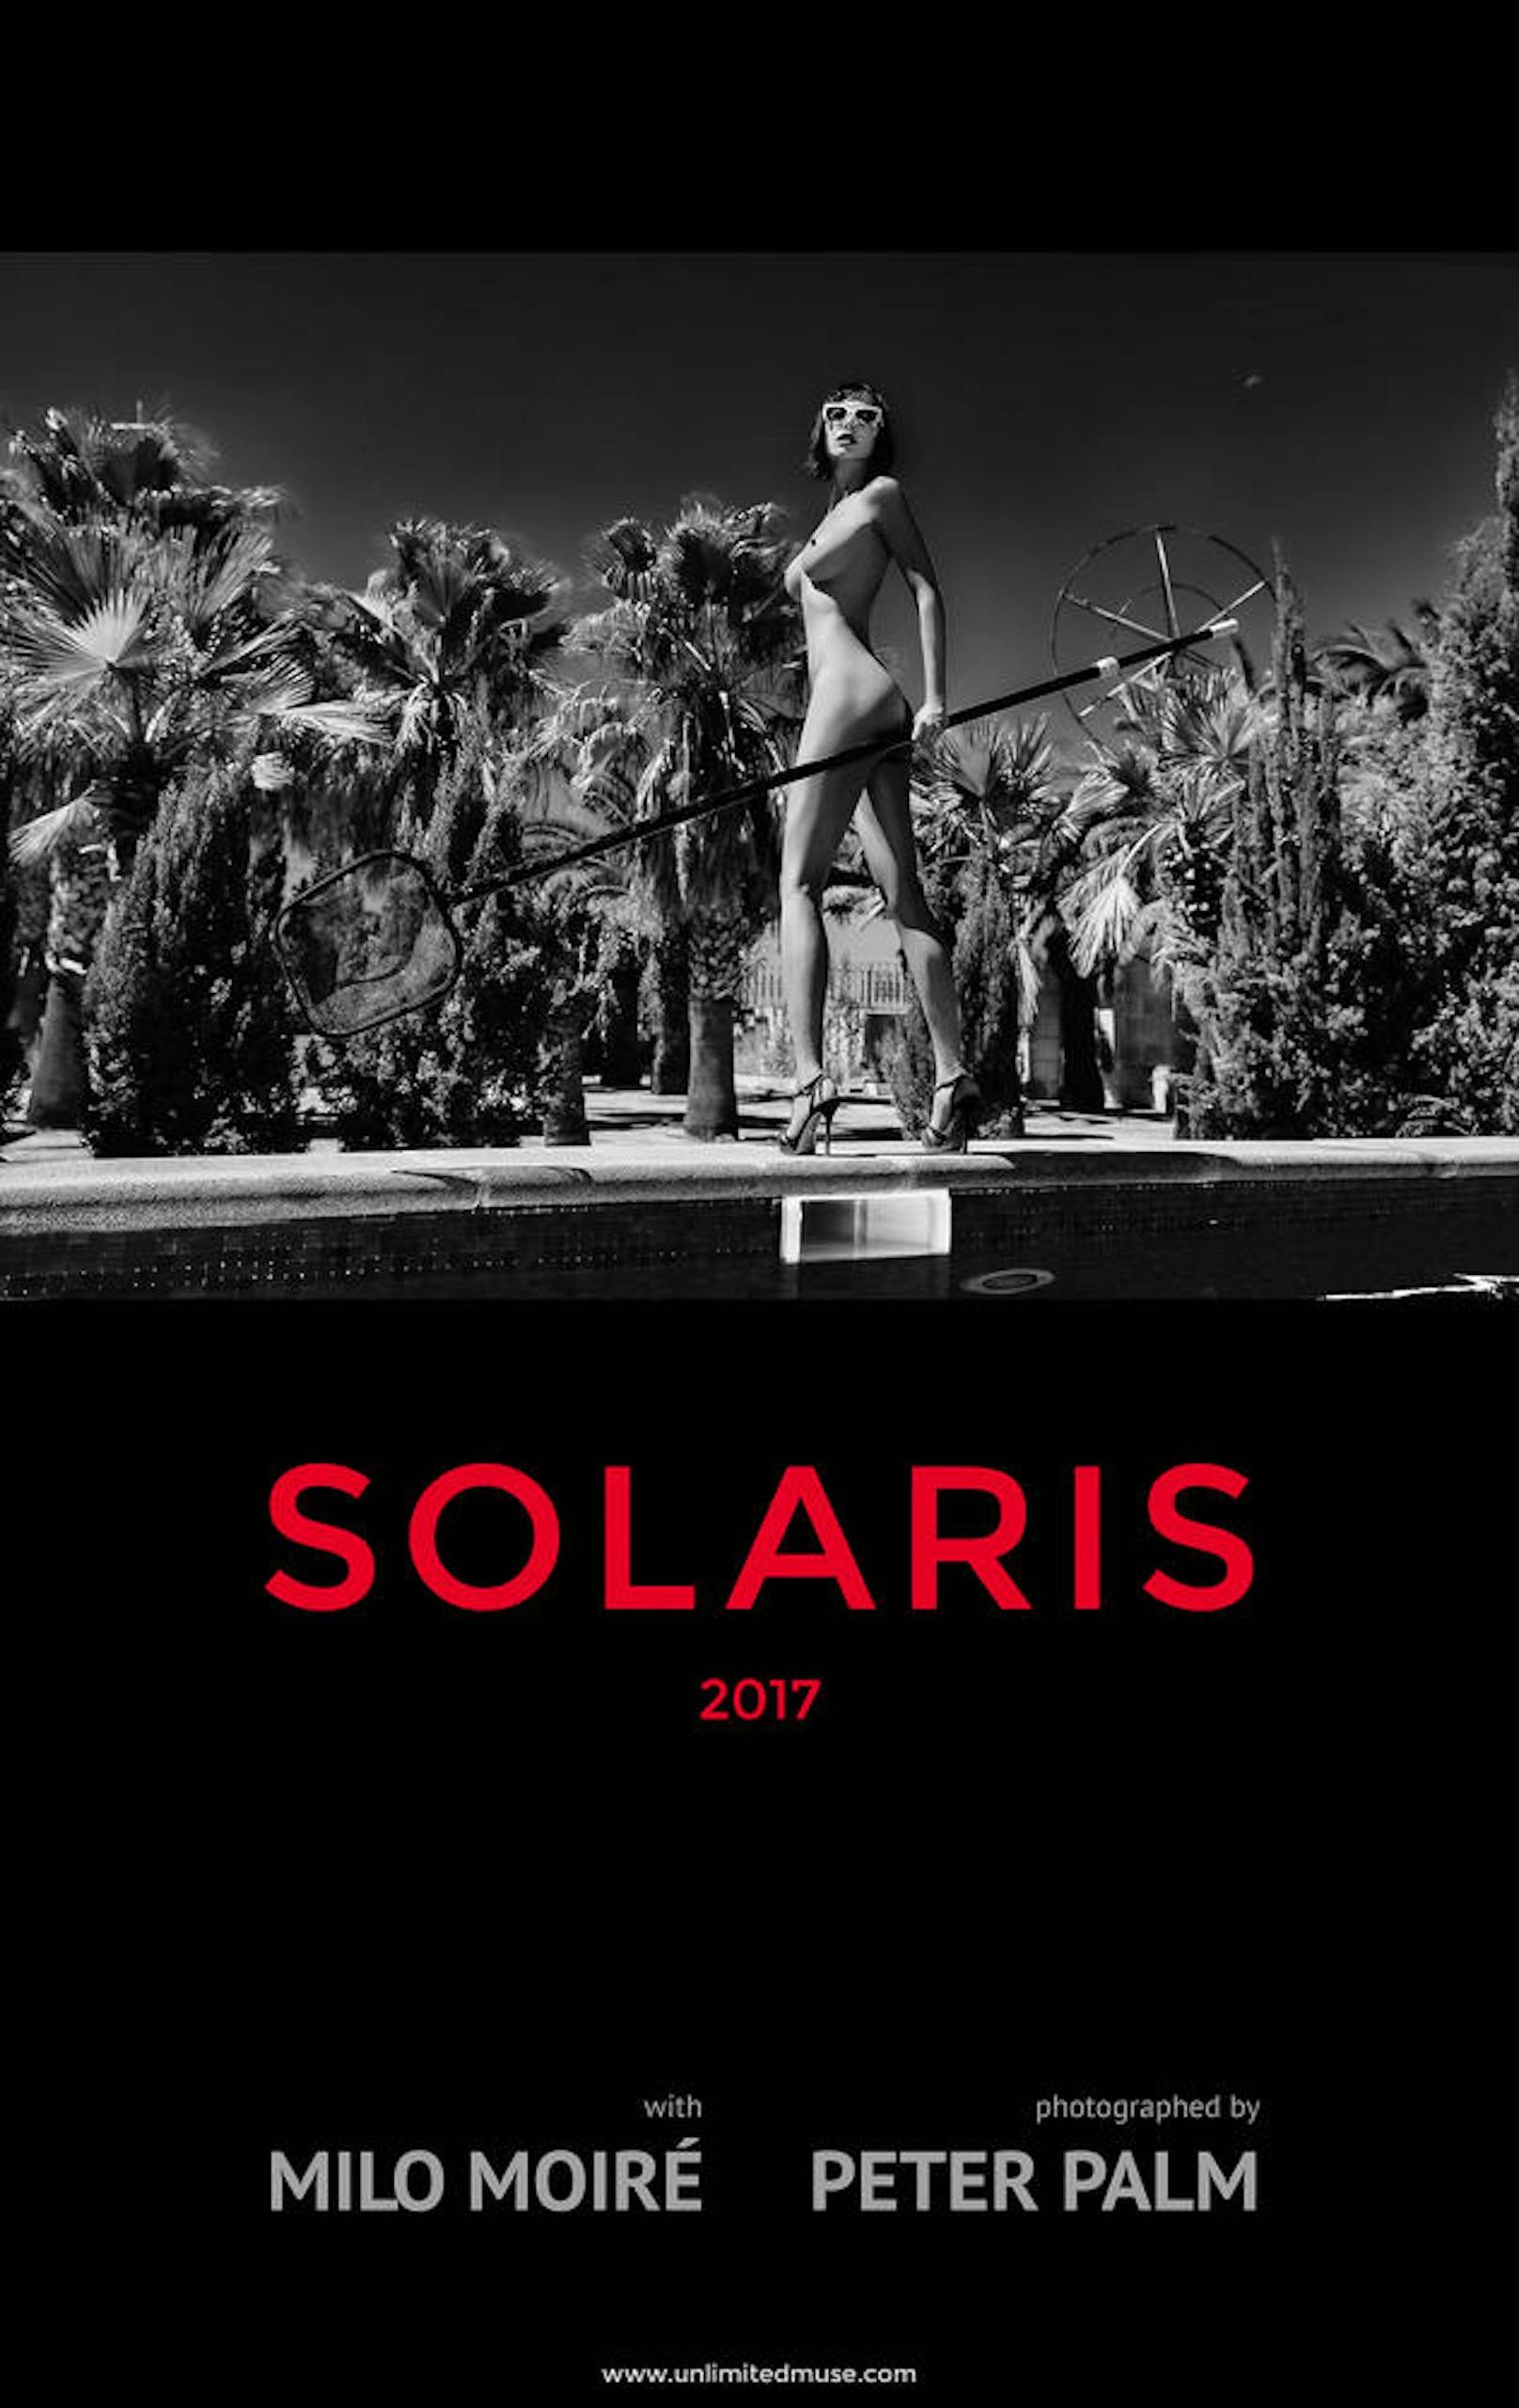 Milo Moire nackt im Kalender 2017 "Solaris"